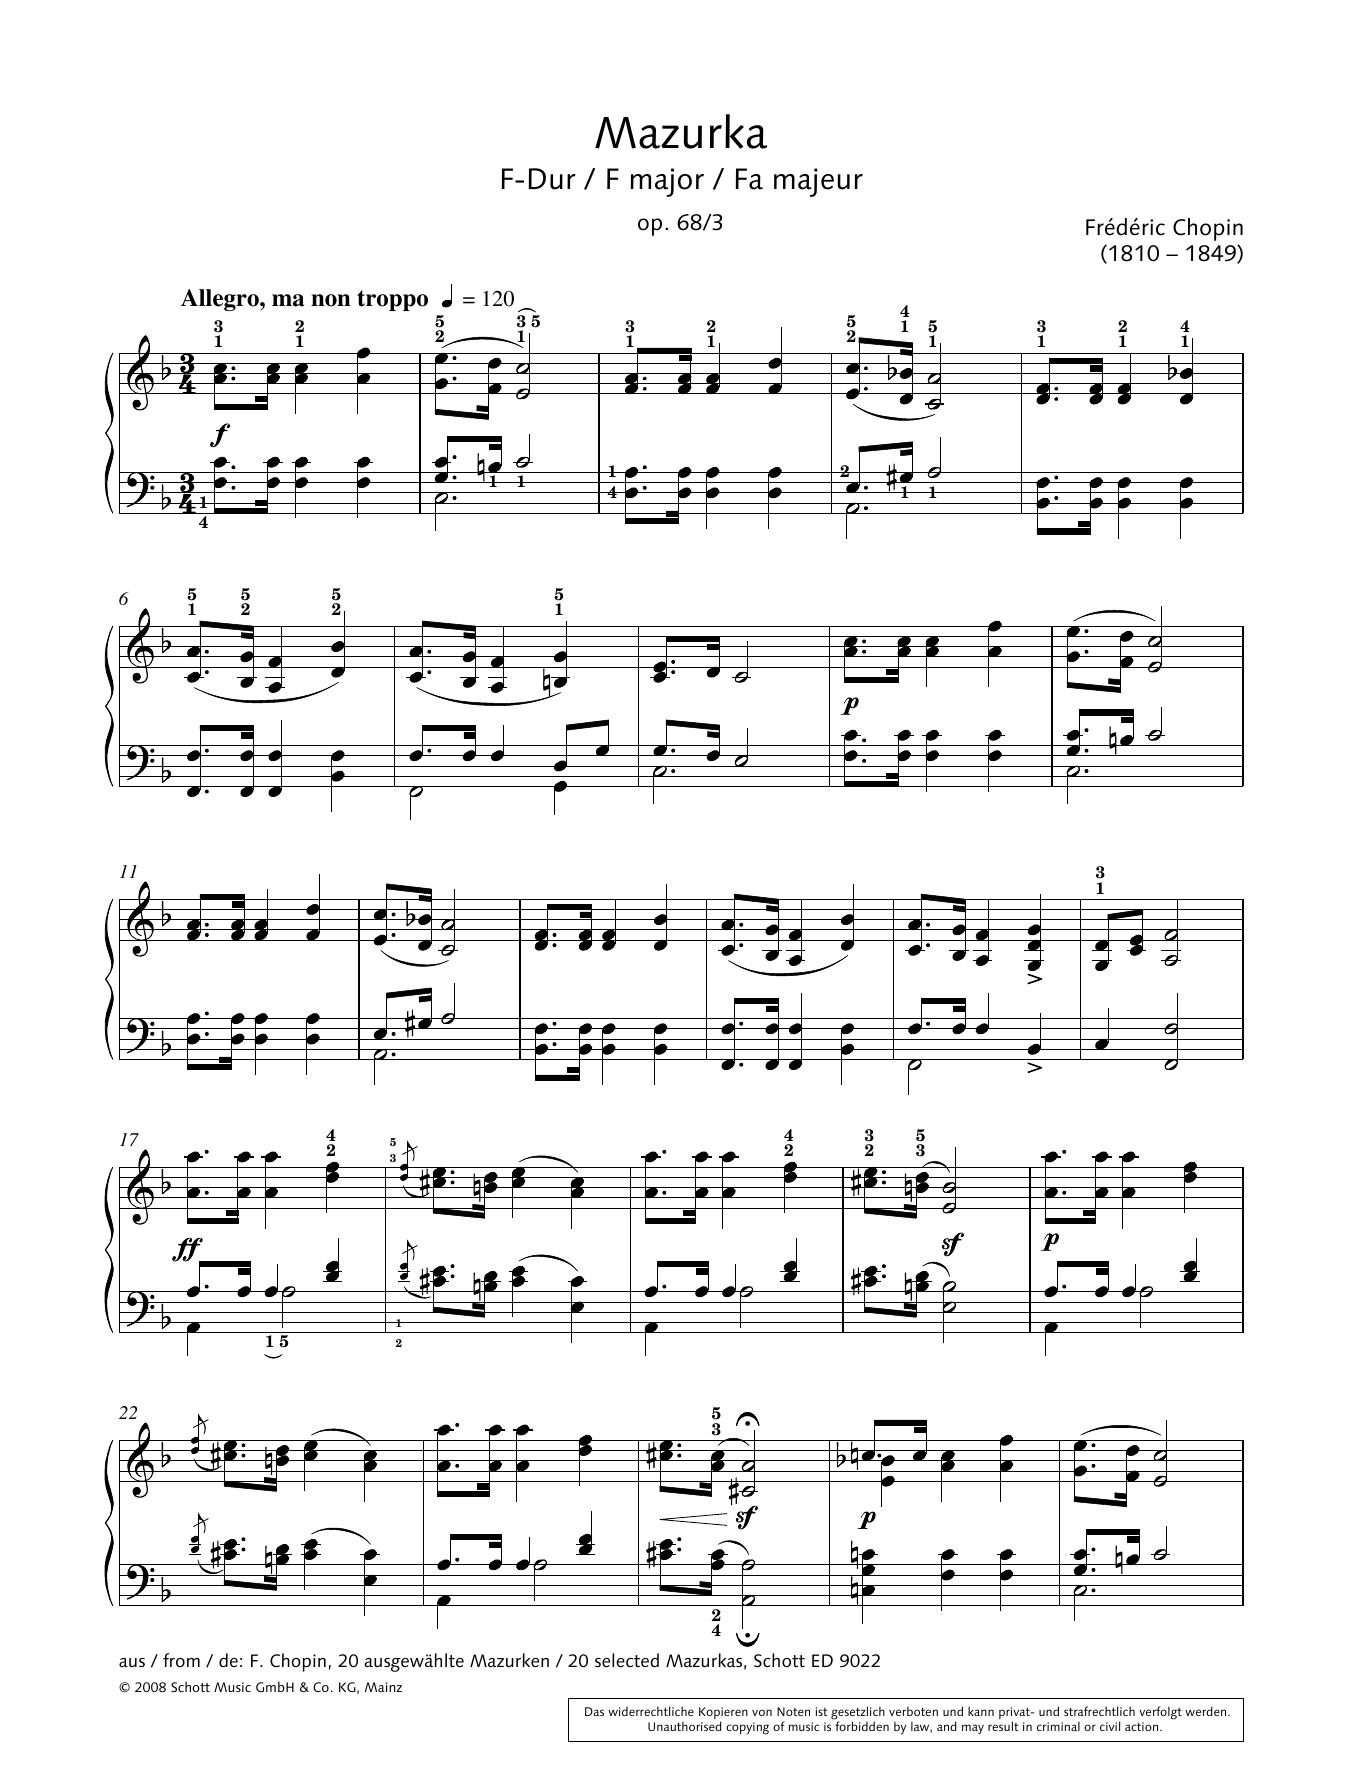 Hans-Gunter Heumann Mazurka in F major Sheet Music Notes & Chords for Piano Solo - Download or Print PDF